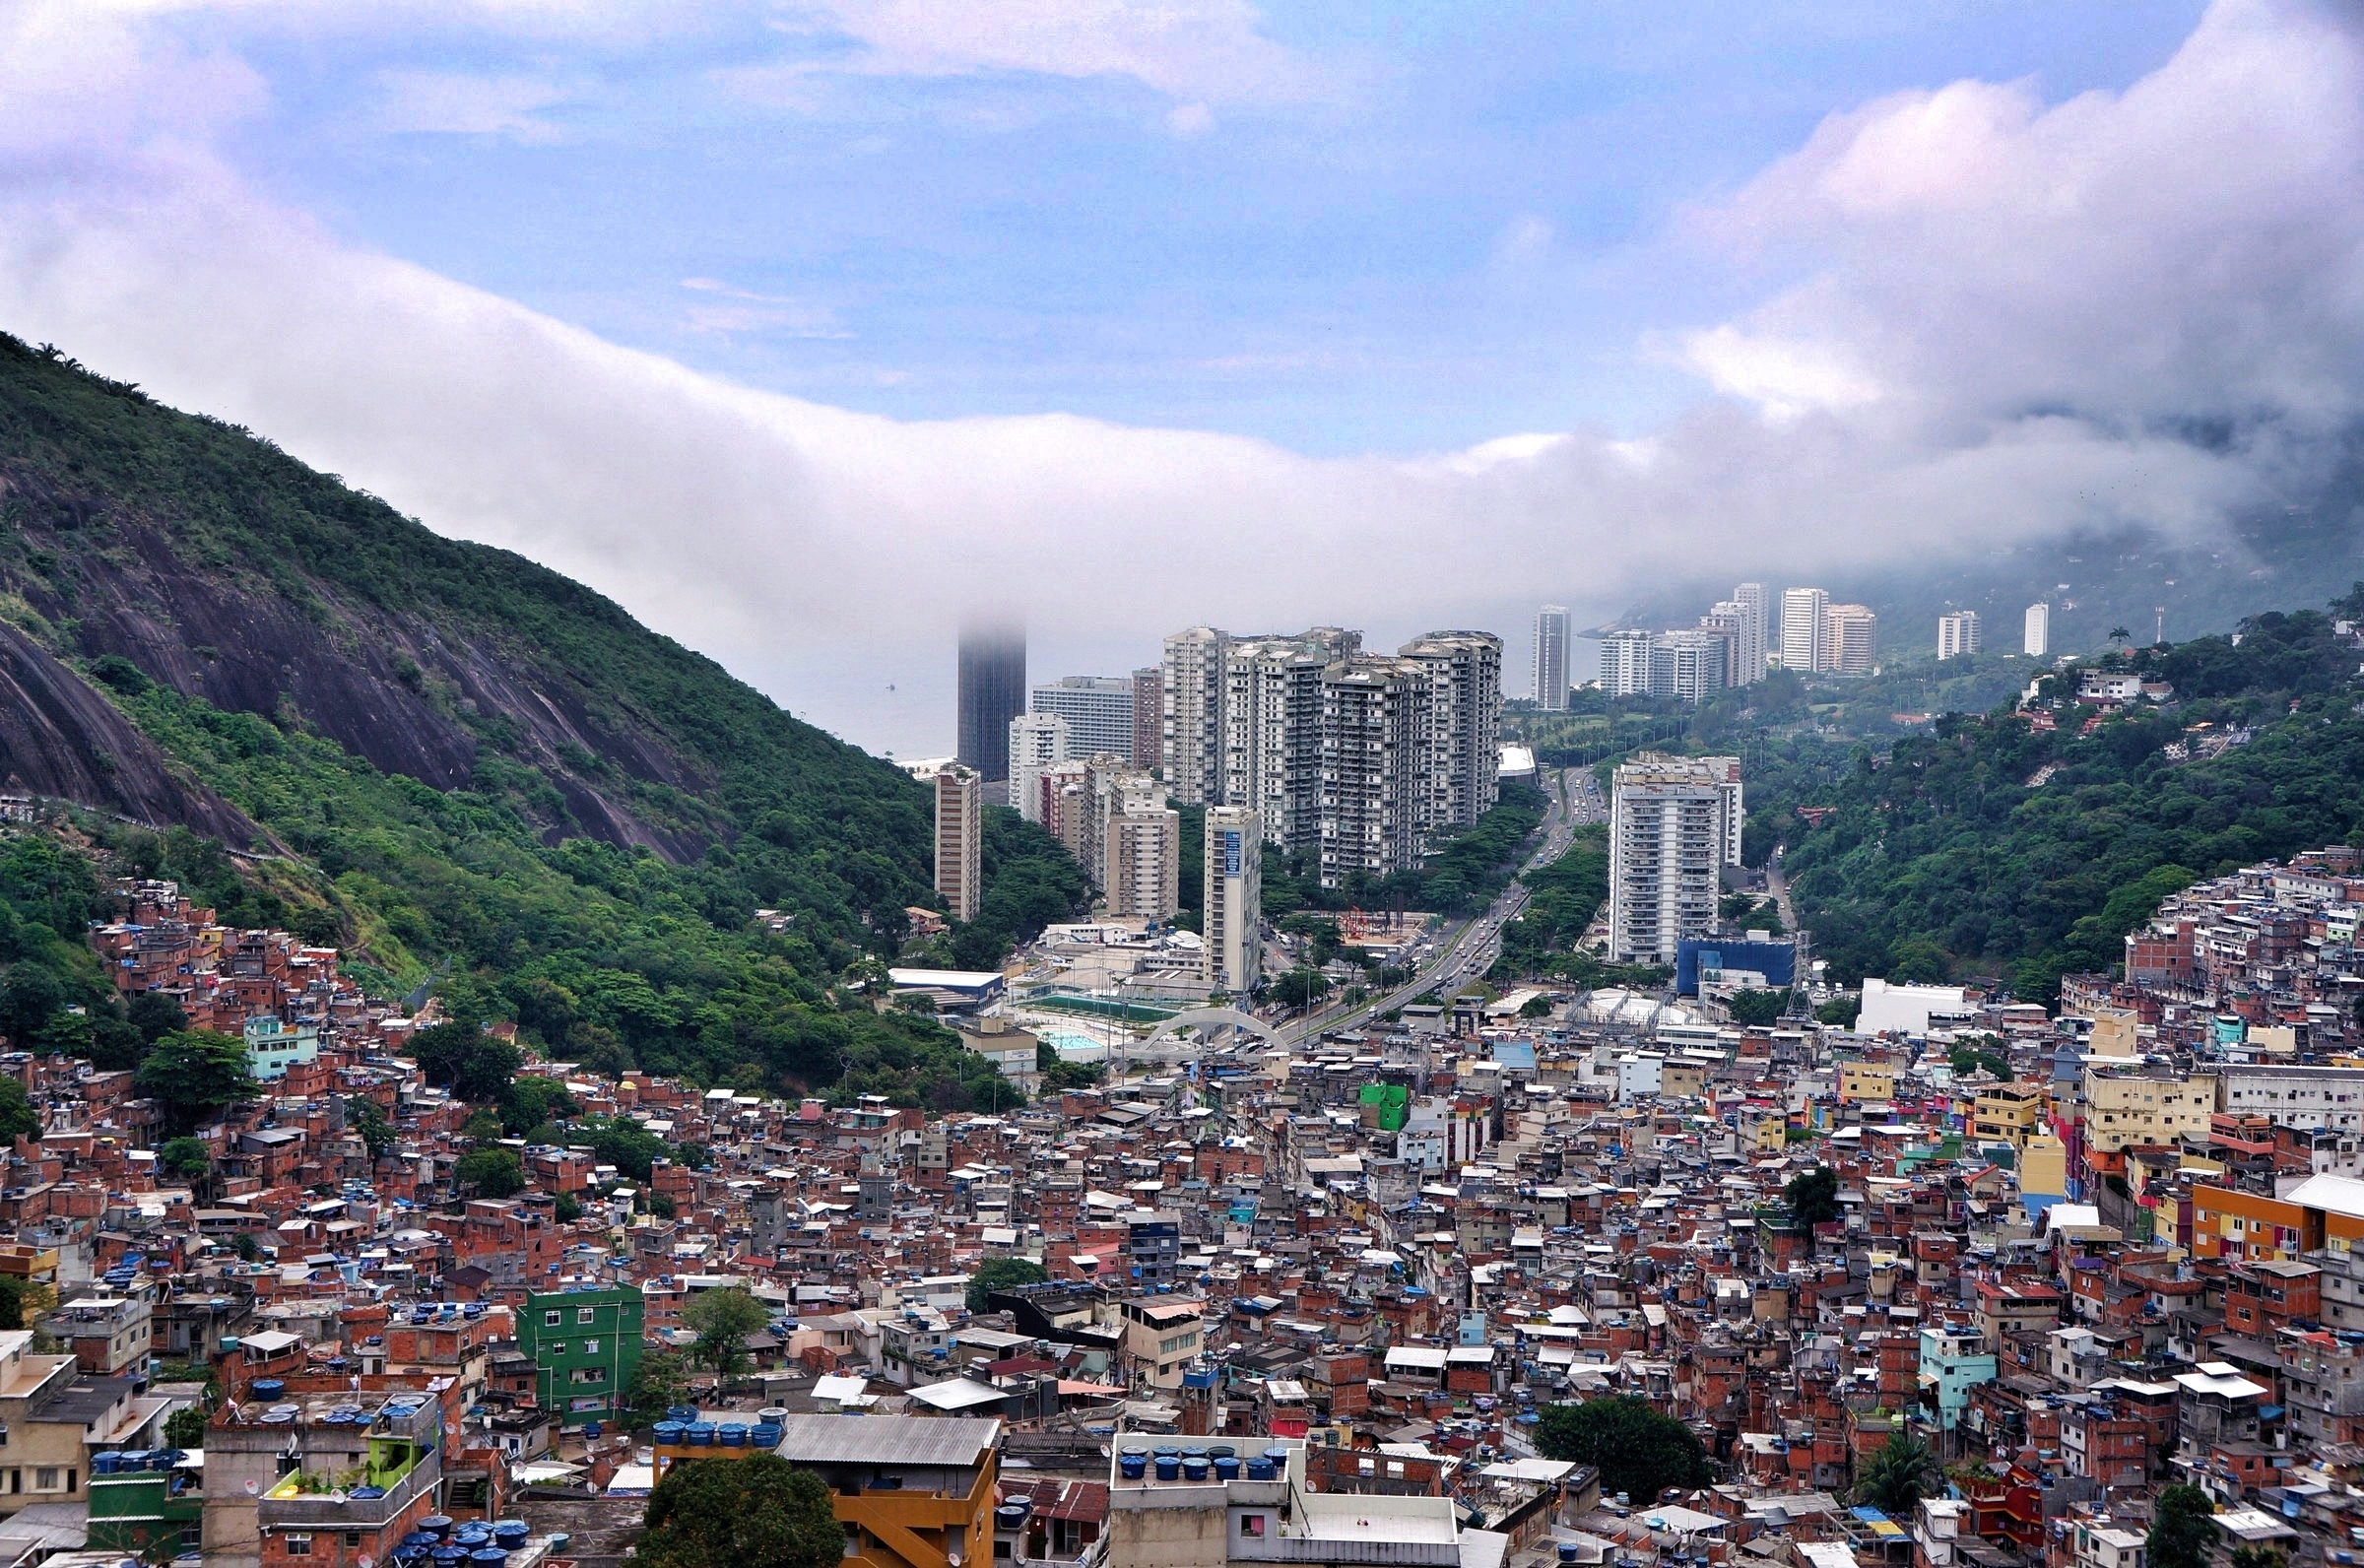 Slum Tourism Spreads In Rio Financial Tribune